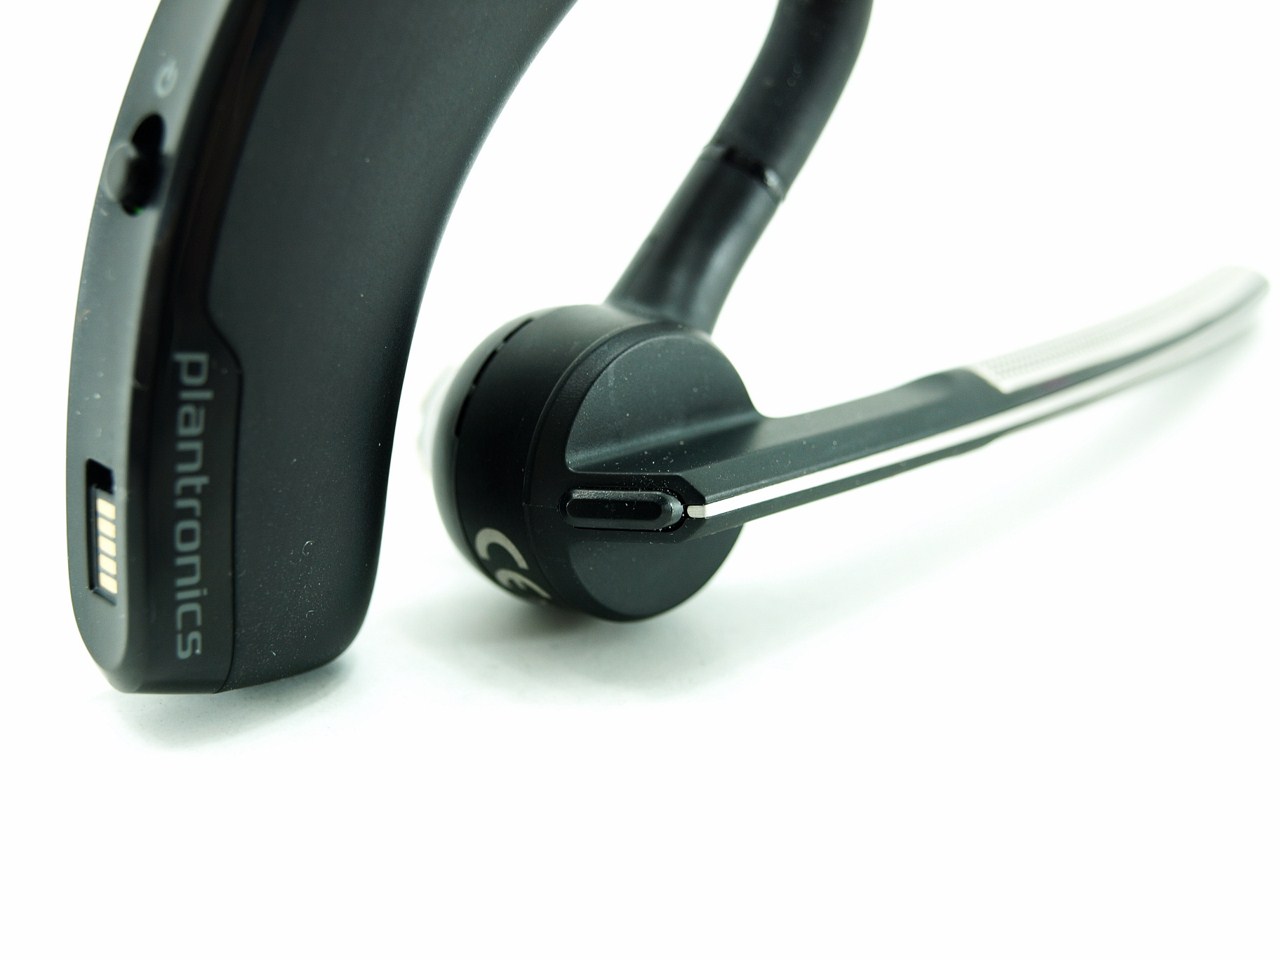 Plantronics Voyager Legend Bluetooth Headset Review